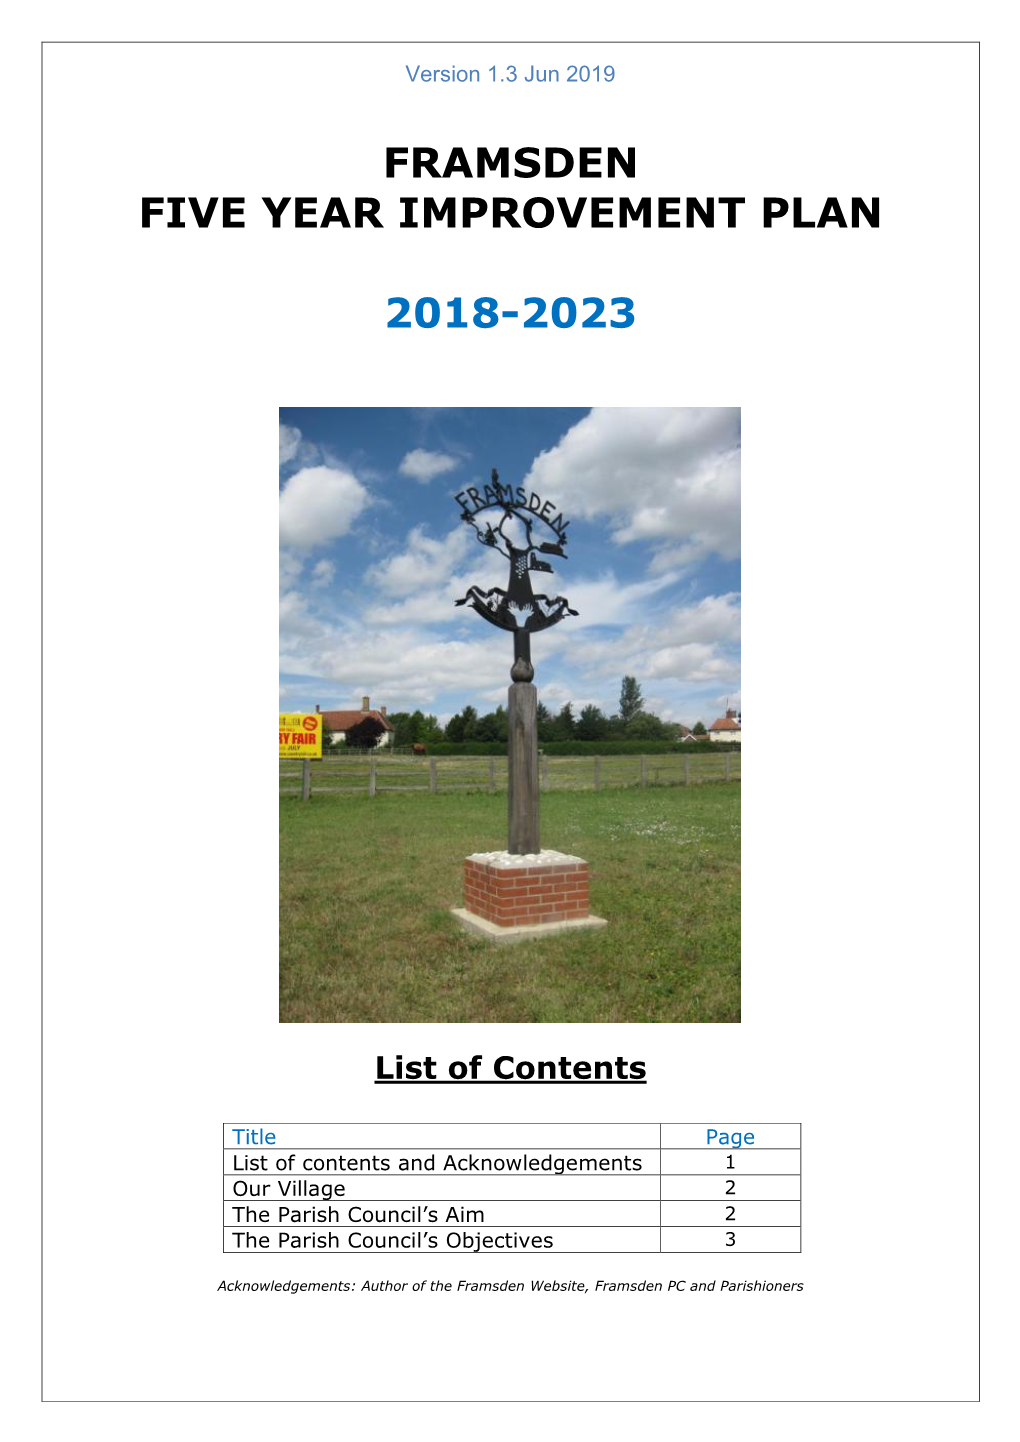 Framsden Five Year Improvement Plan 2018-2023